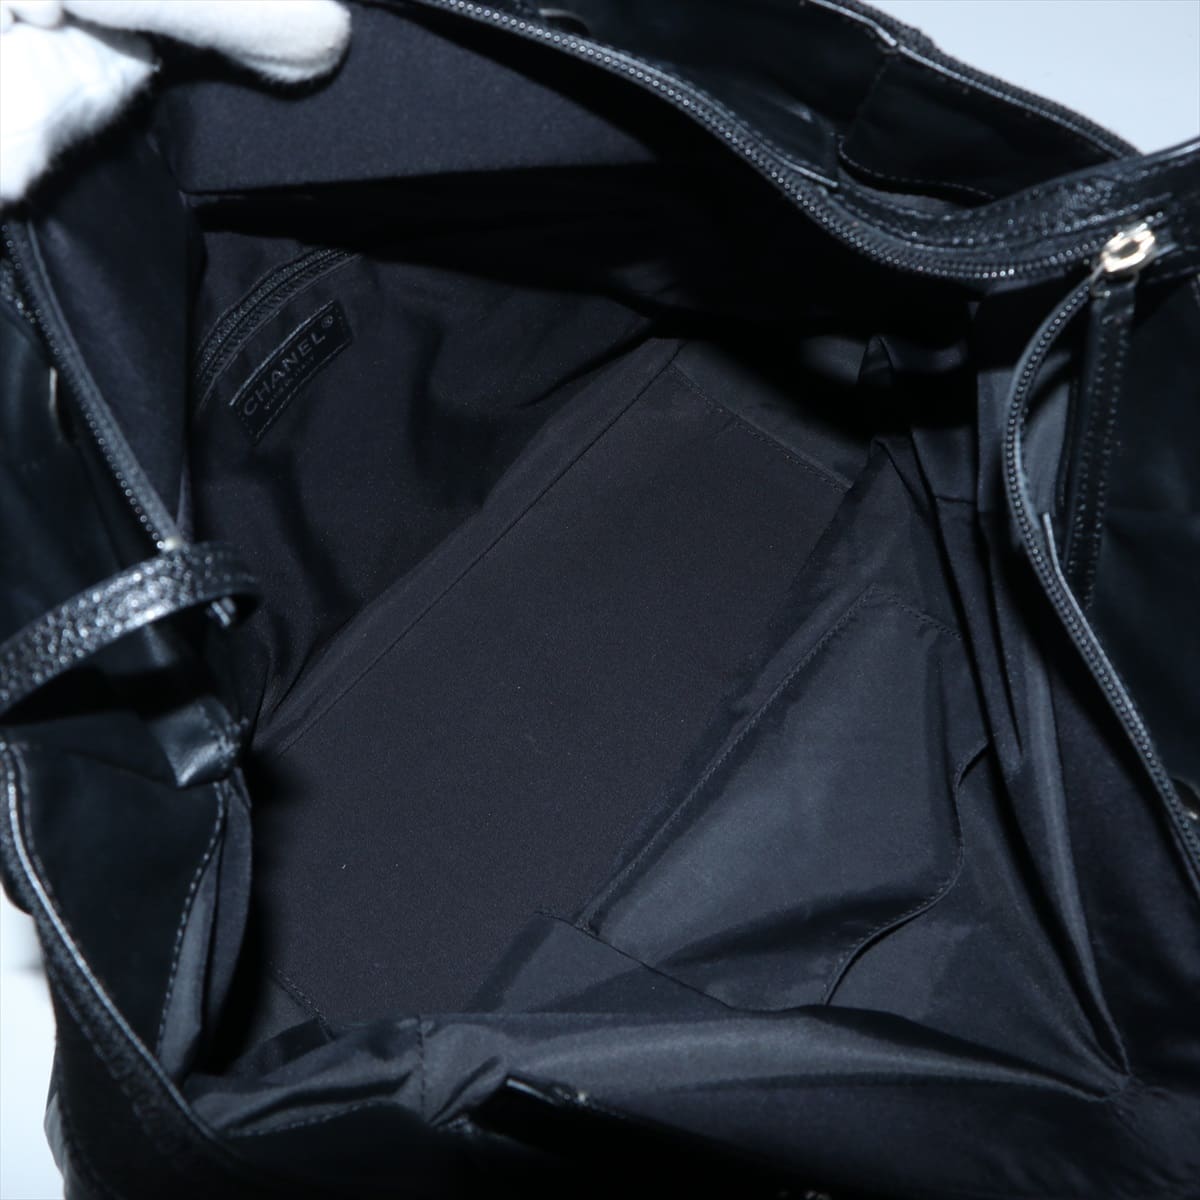 Chanel Paris Biarritz GM Leather Hand bag Black Has fray